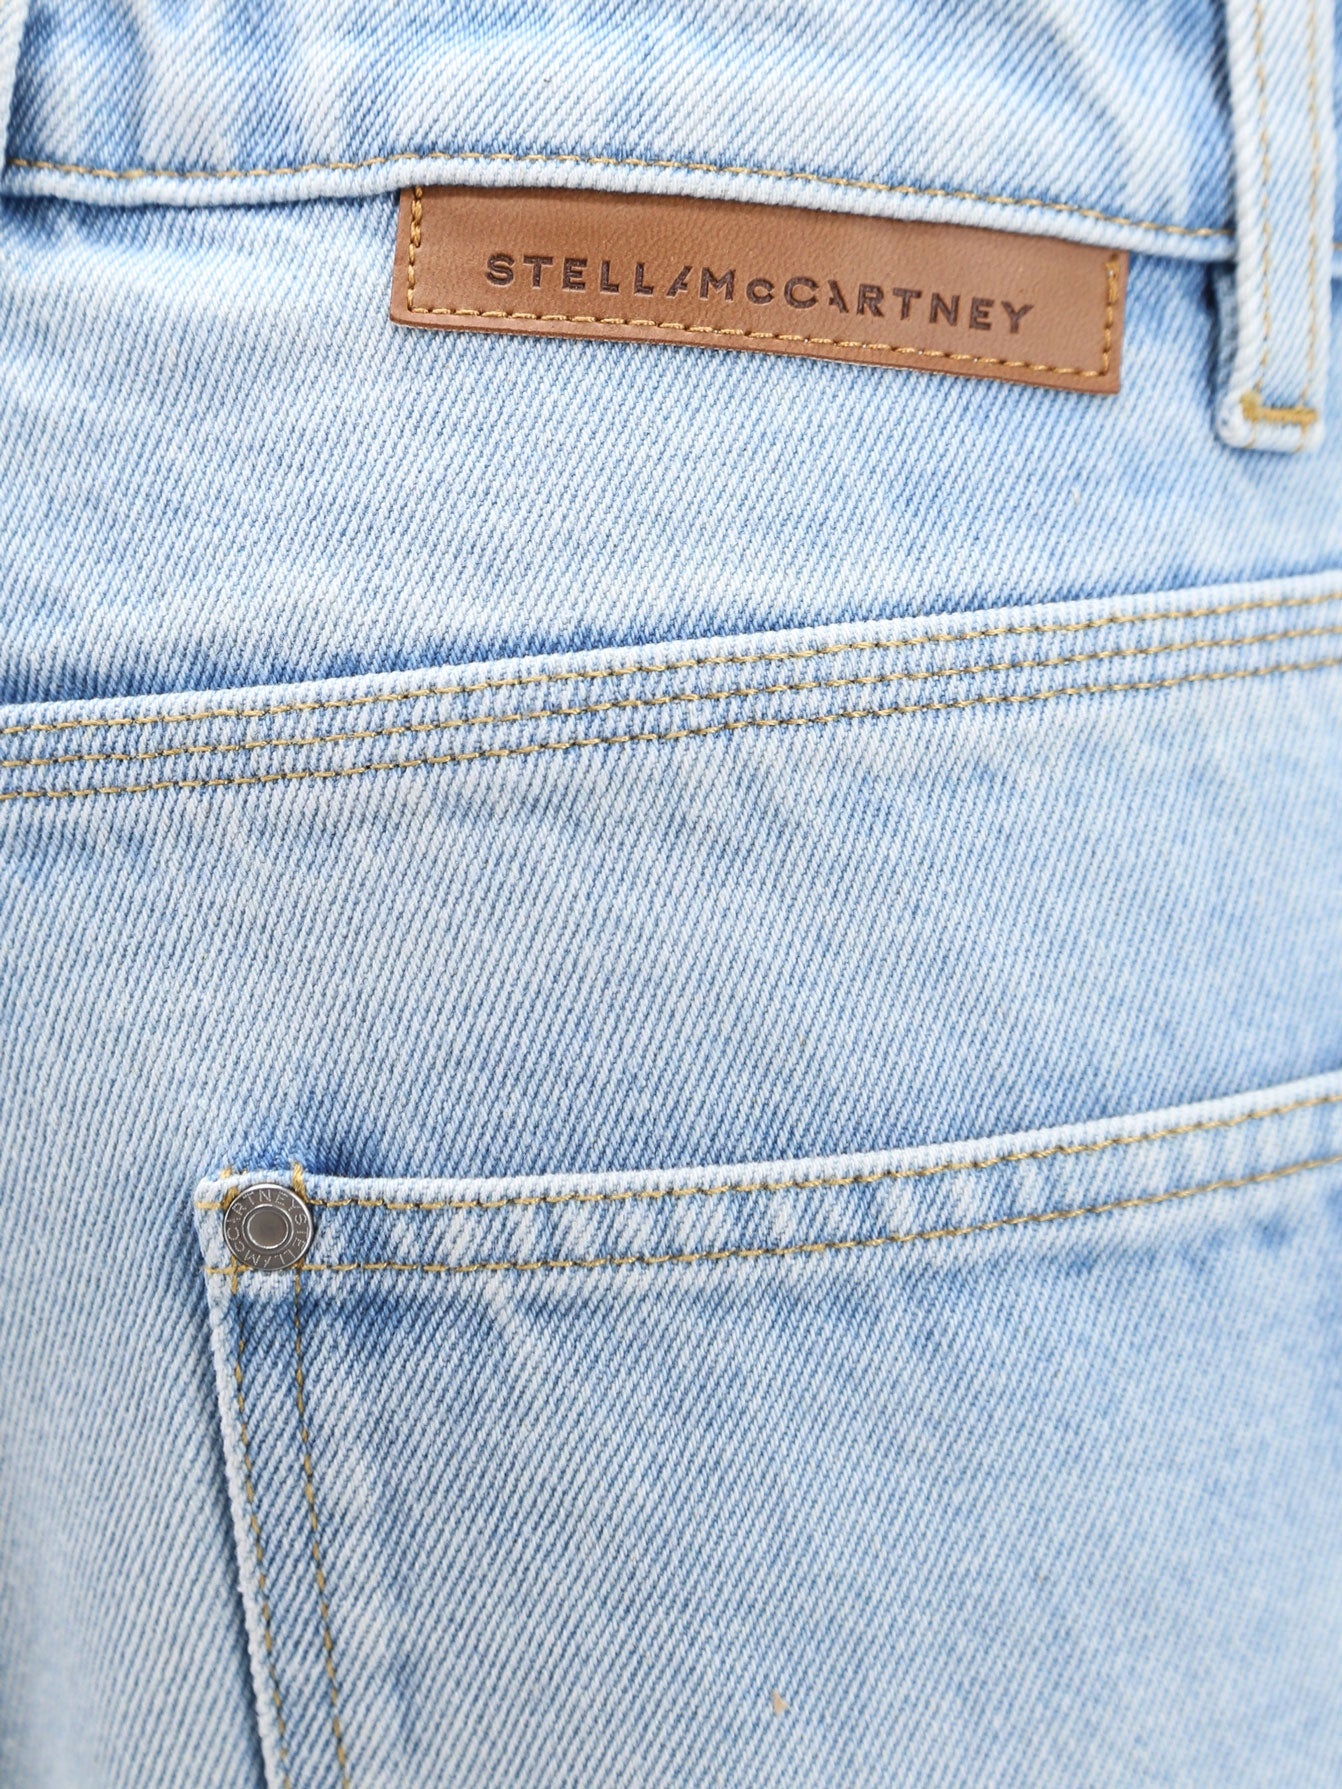 Sustainable cotton jeans - 3